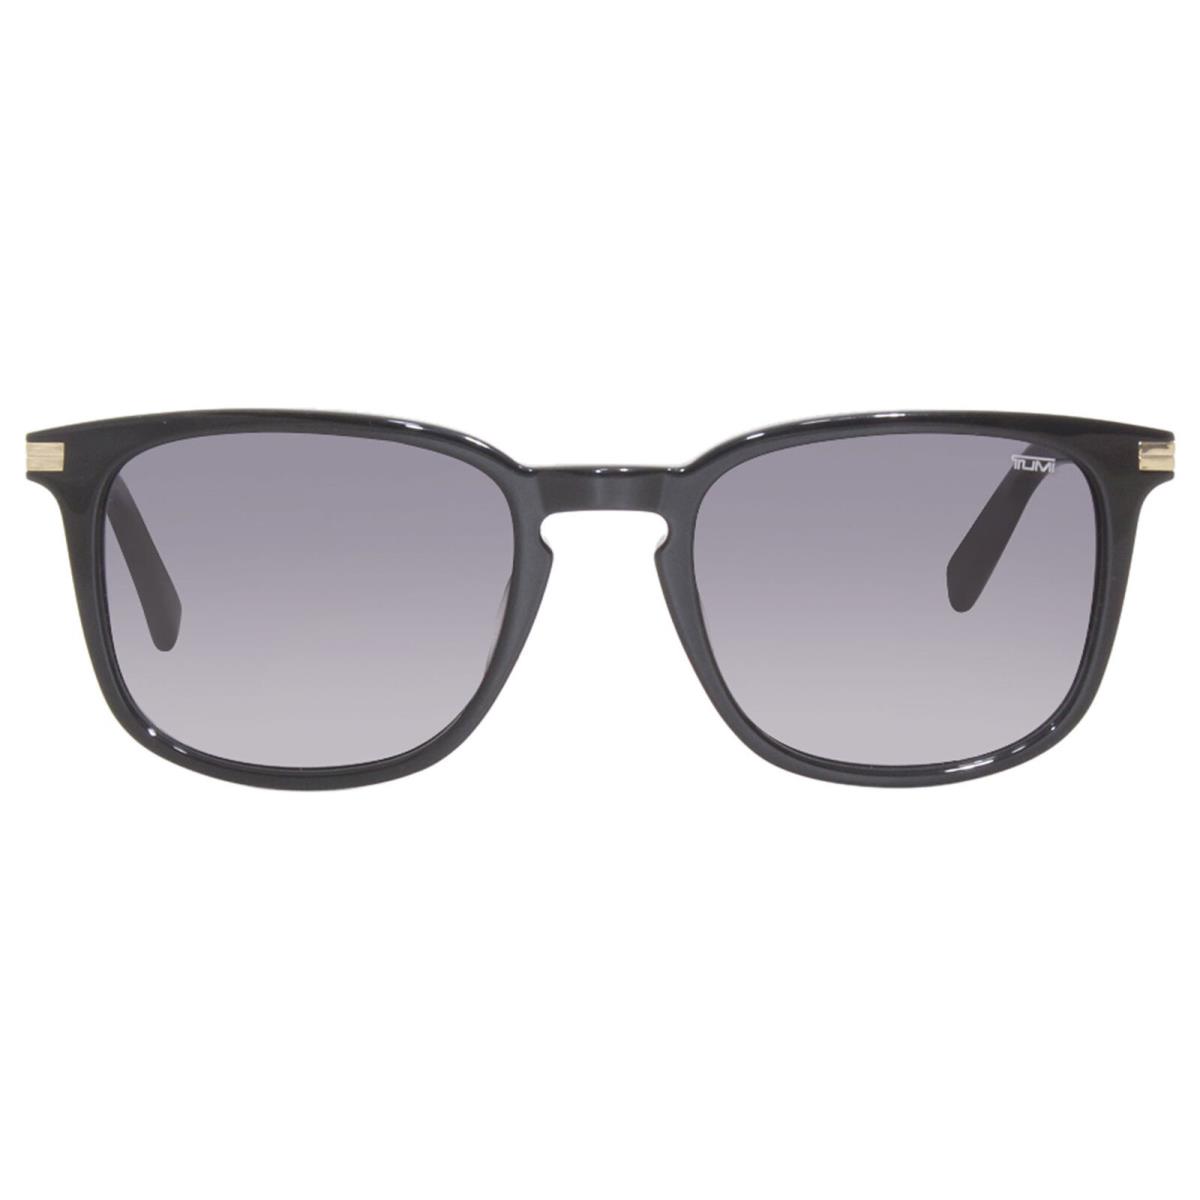 Tumi STU005 0700 Sunglasses Men`s Black/grey Gradient CR39 Lenses Square Shape